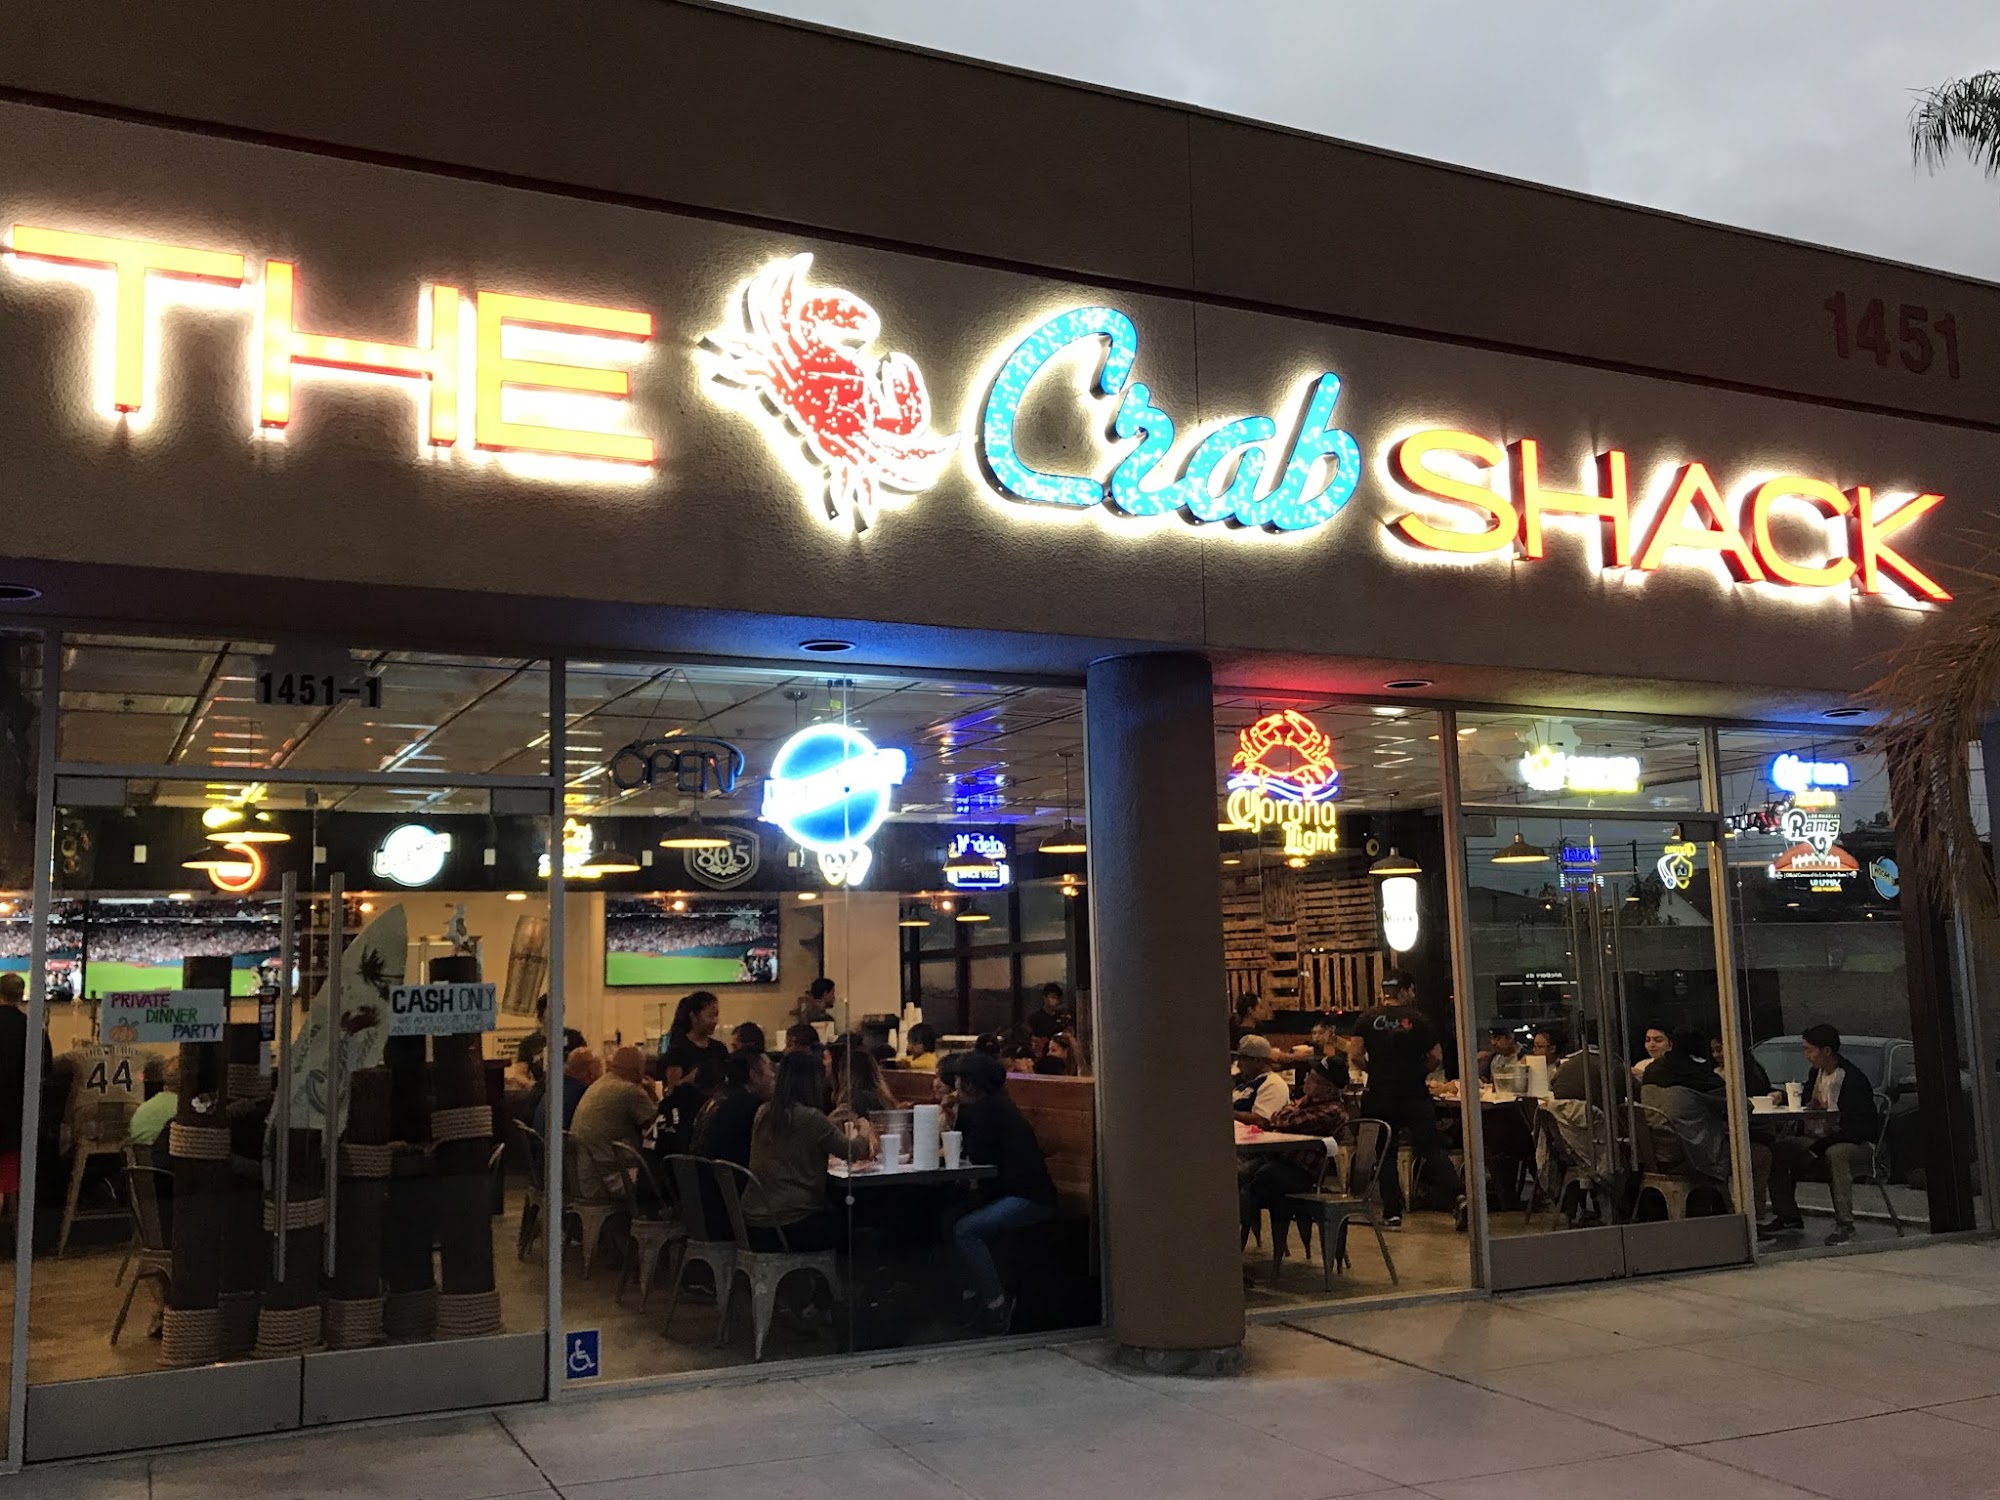 The Crab Shack, Gardena, Gateway Plaza